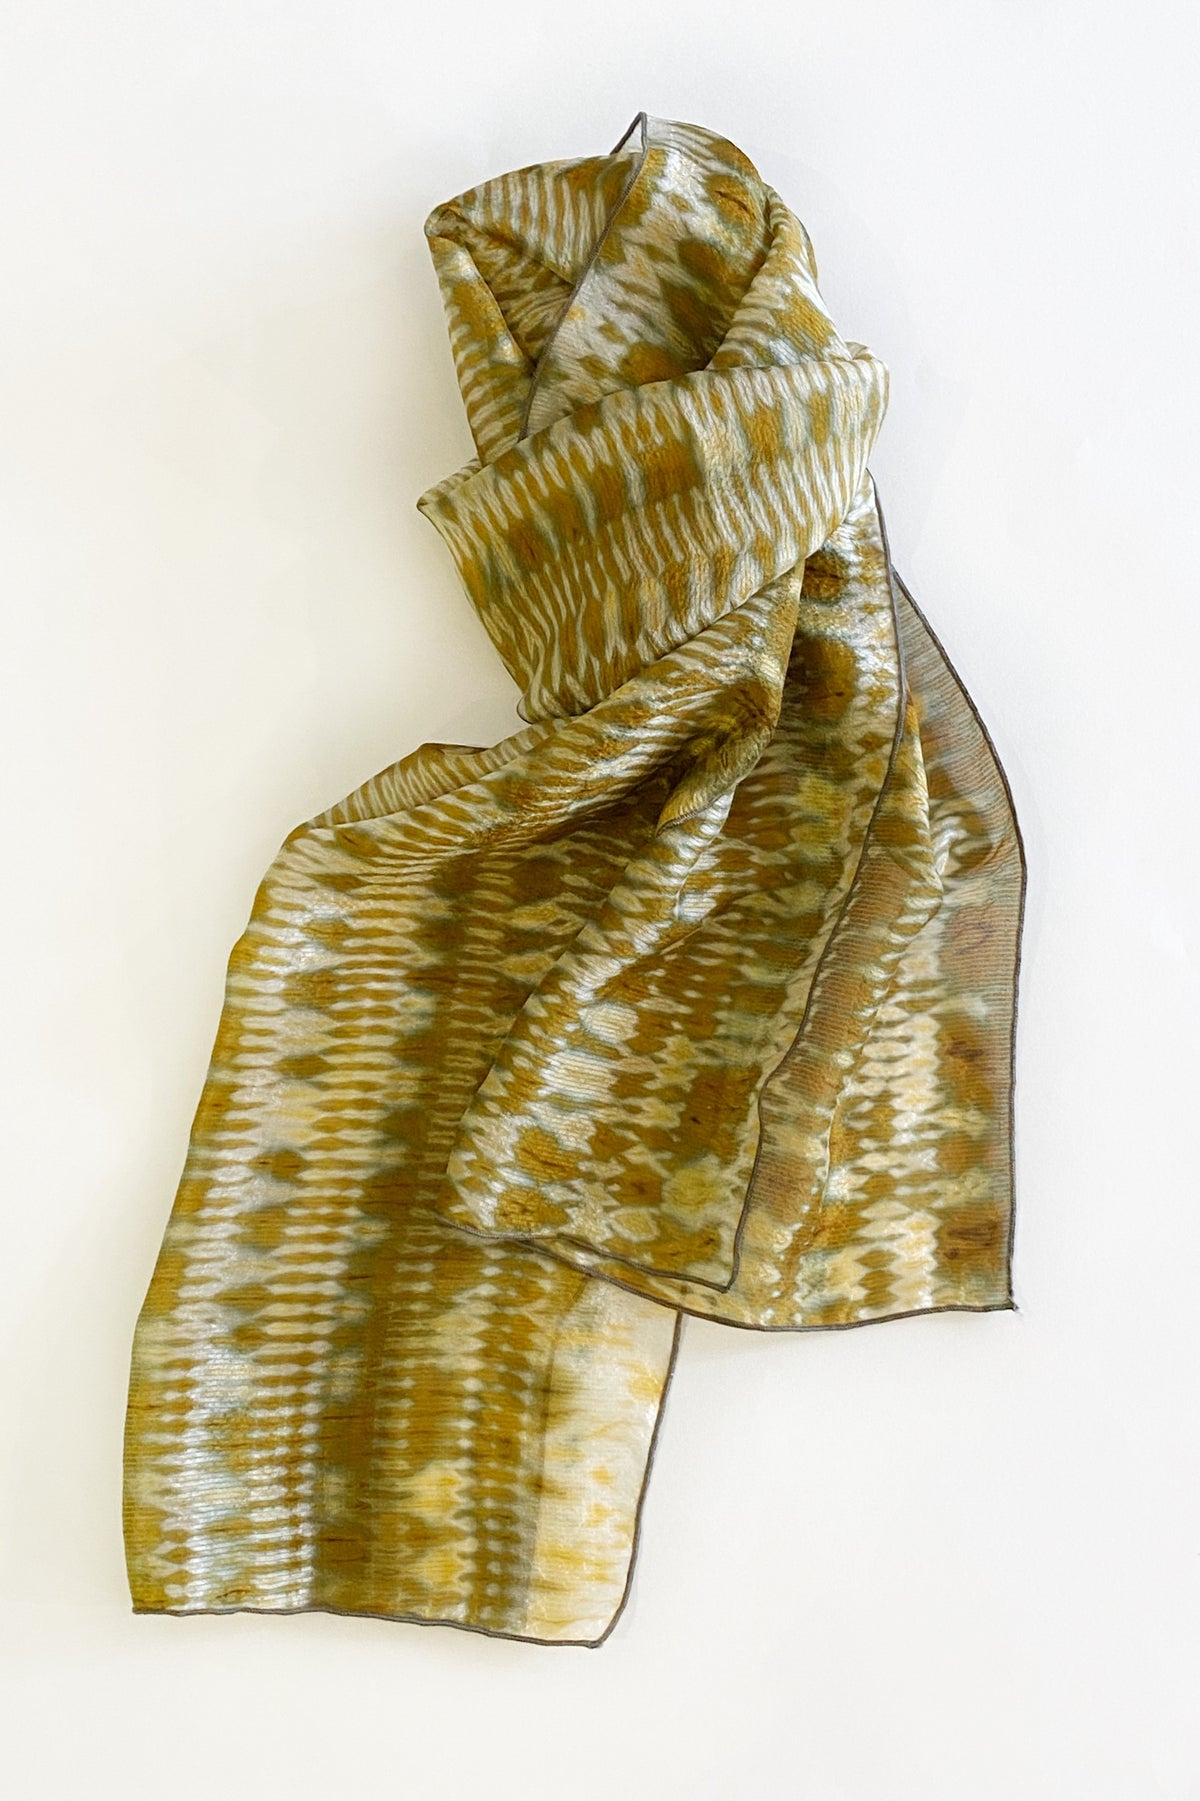 Shibori Dyed Silk Scarf in Mustard & Goldenrod